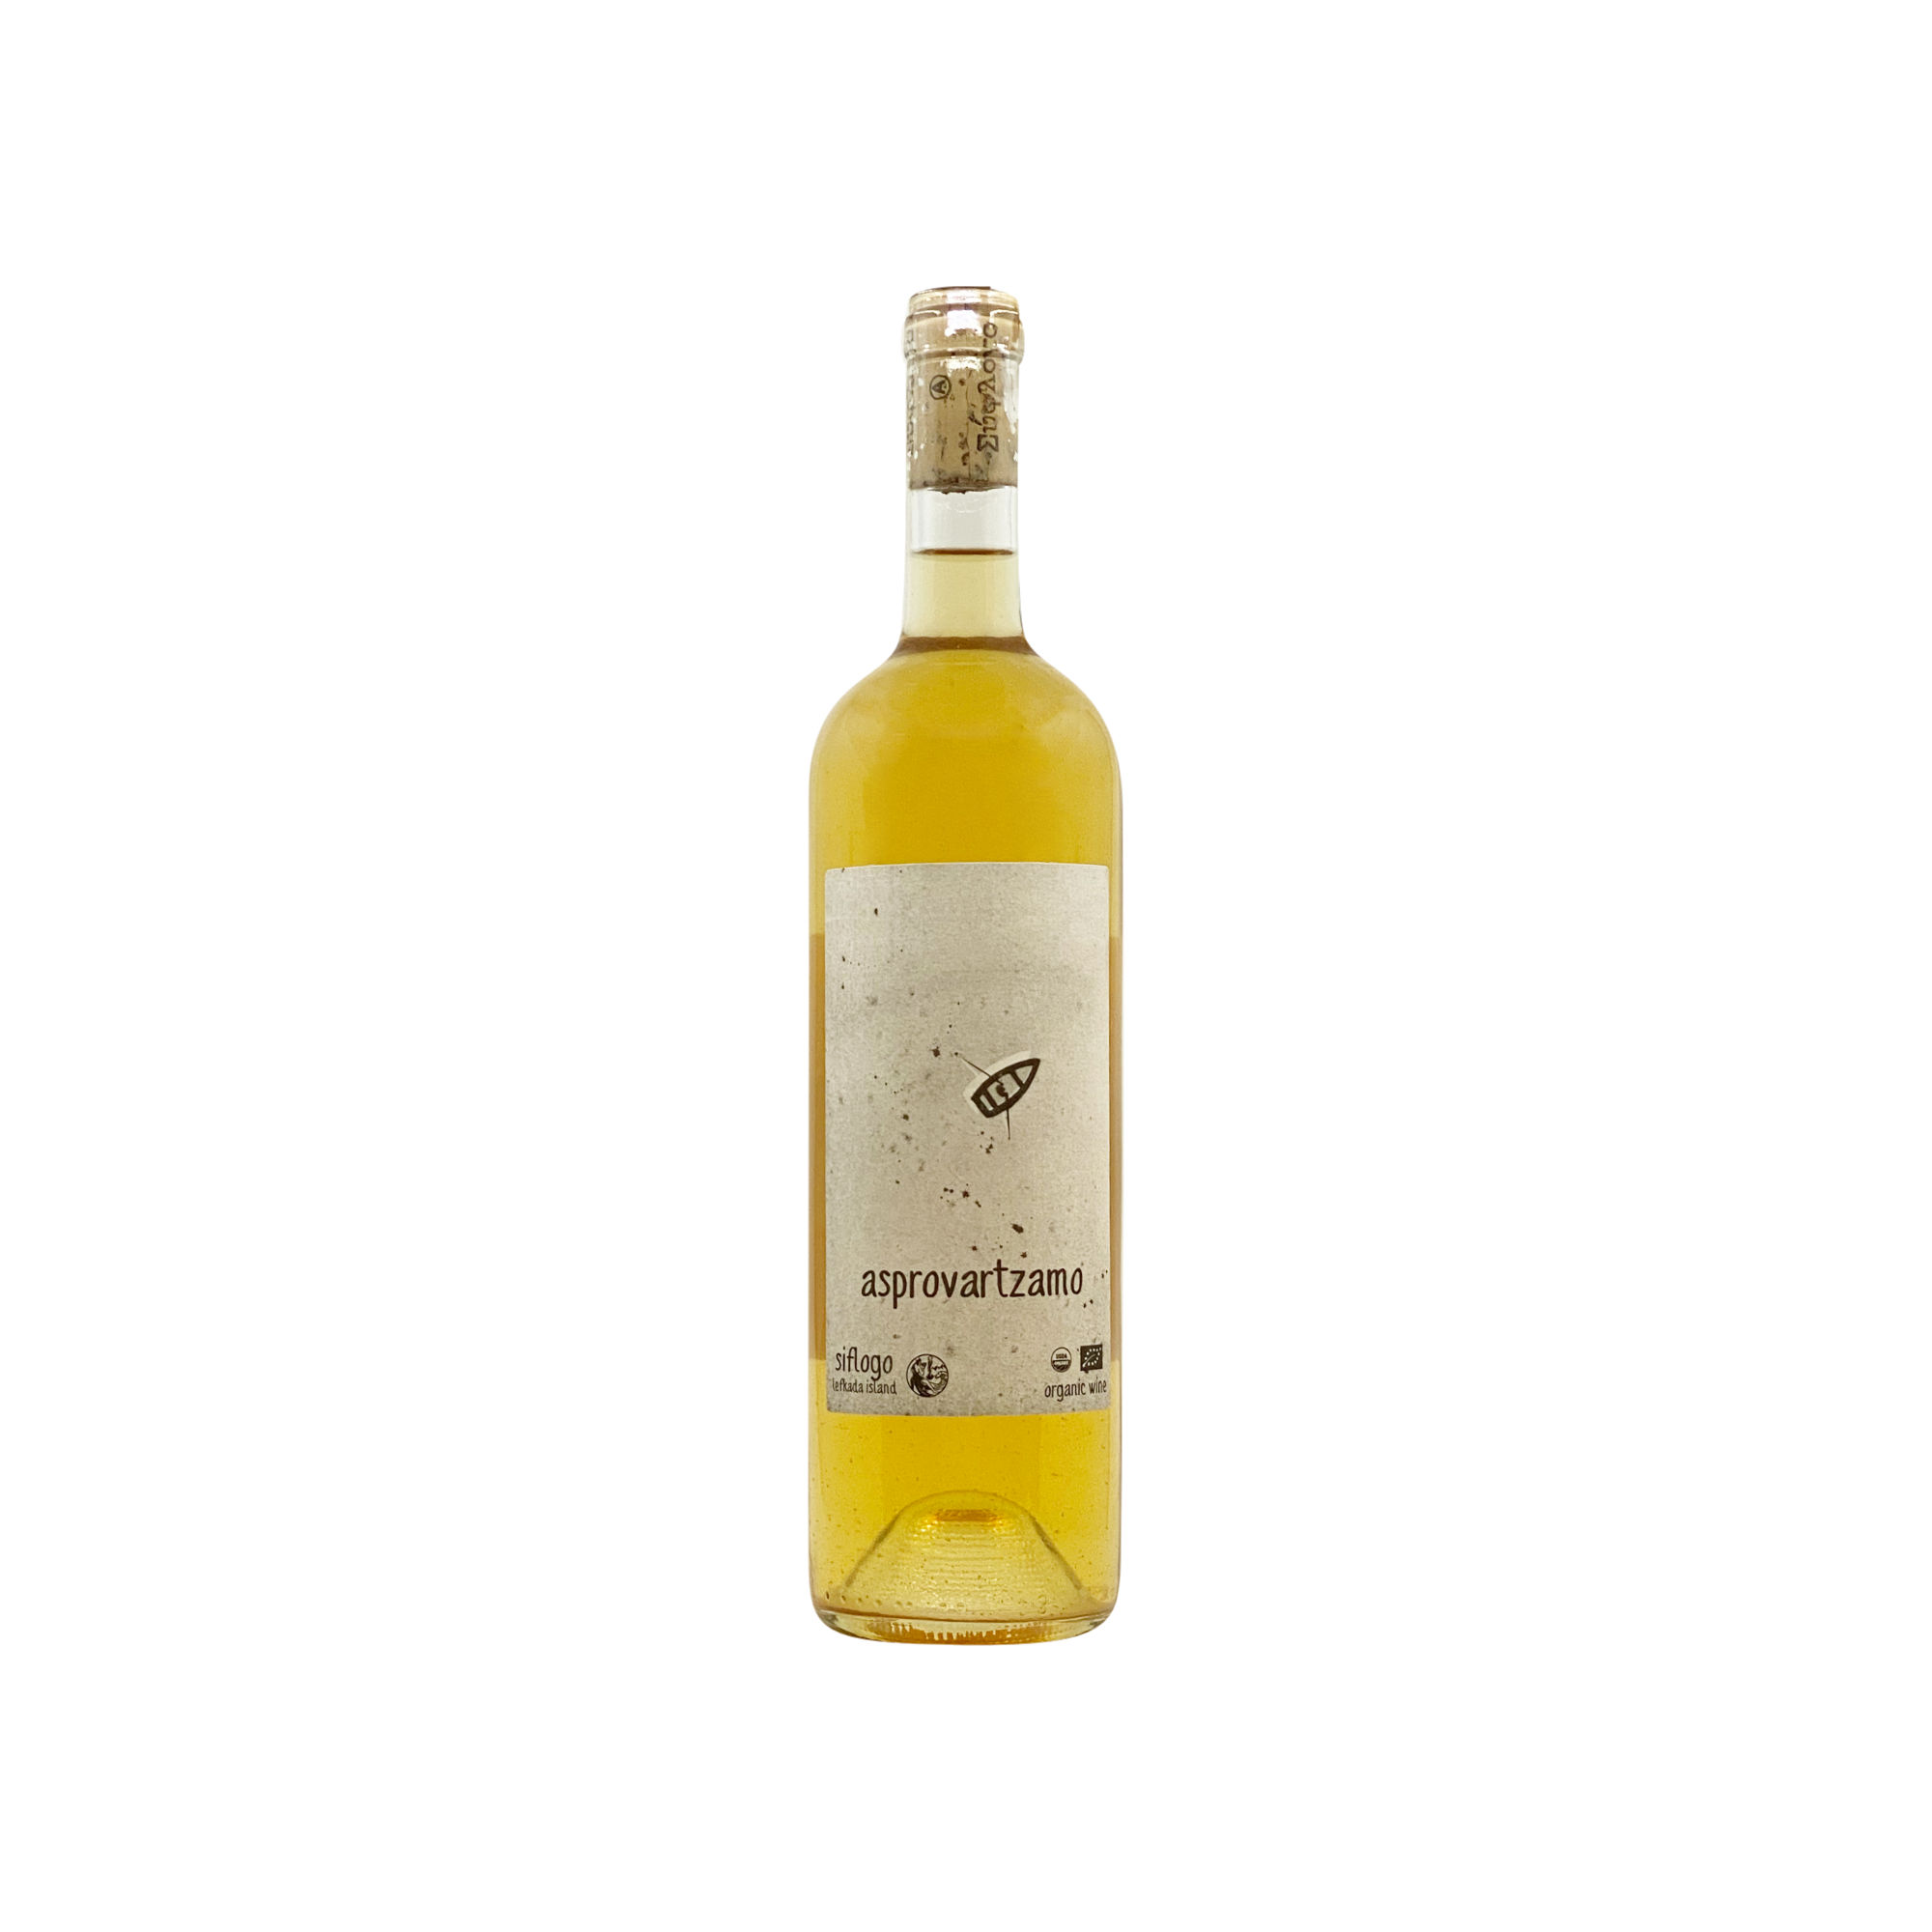 Siflogo - Lefkada Island - Ionian sea - Asprovartzamo - Orange natural wine with zero added sulfites - ORGANIC wine - Eklektikon - Greek wine